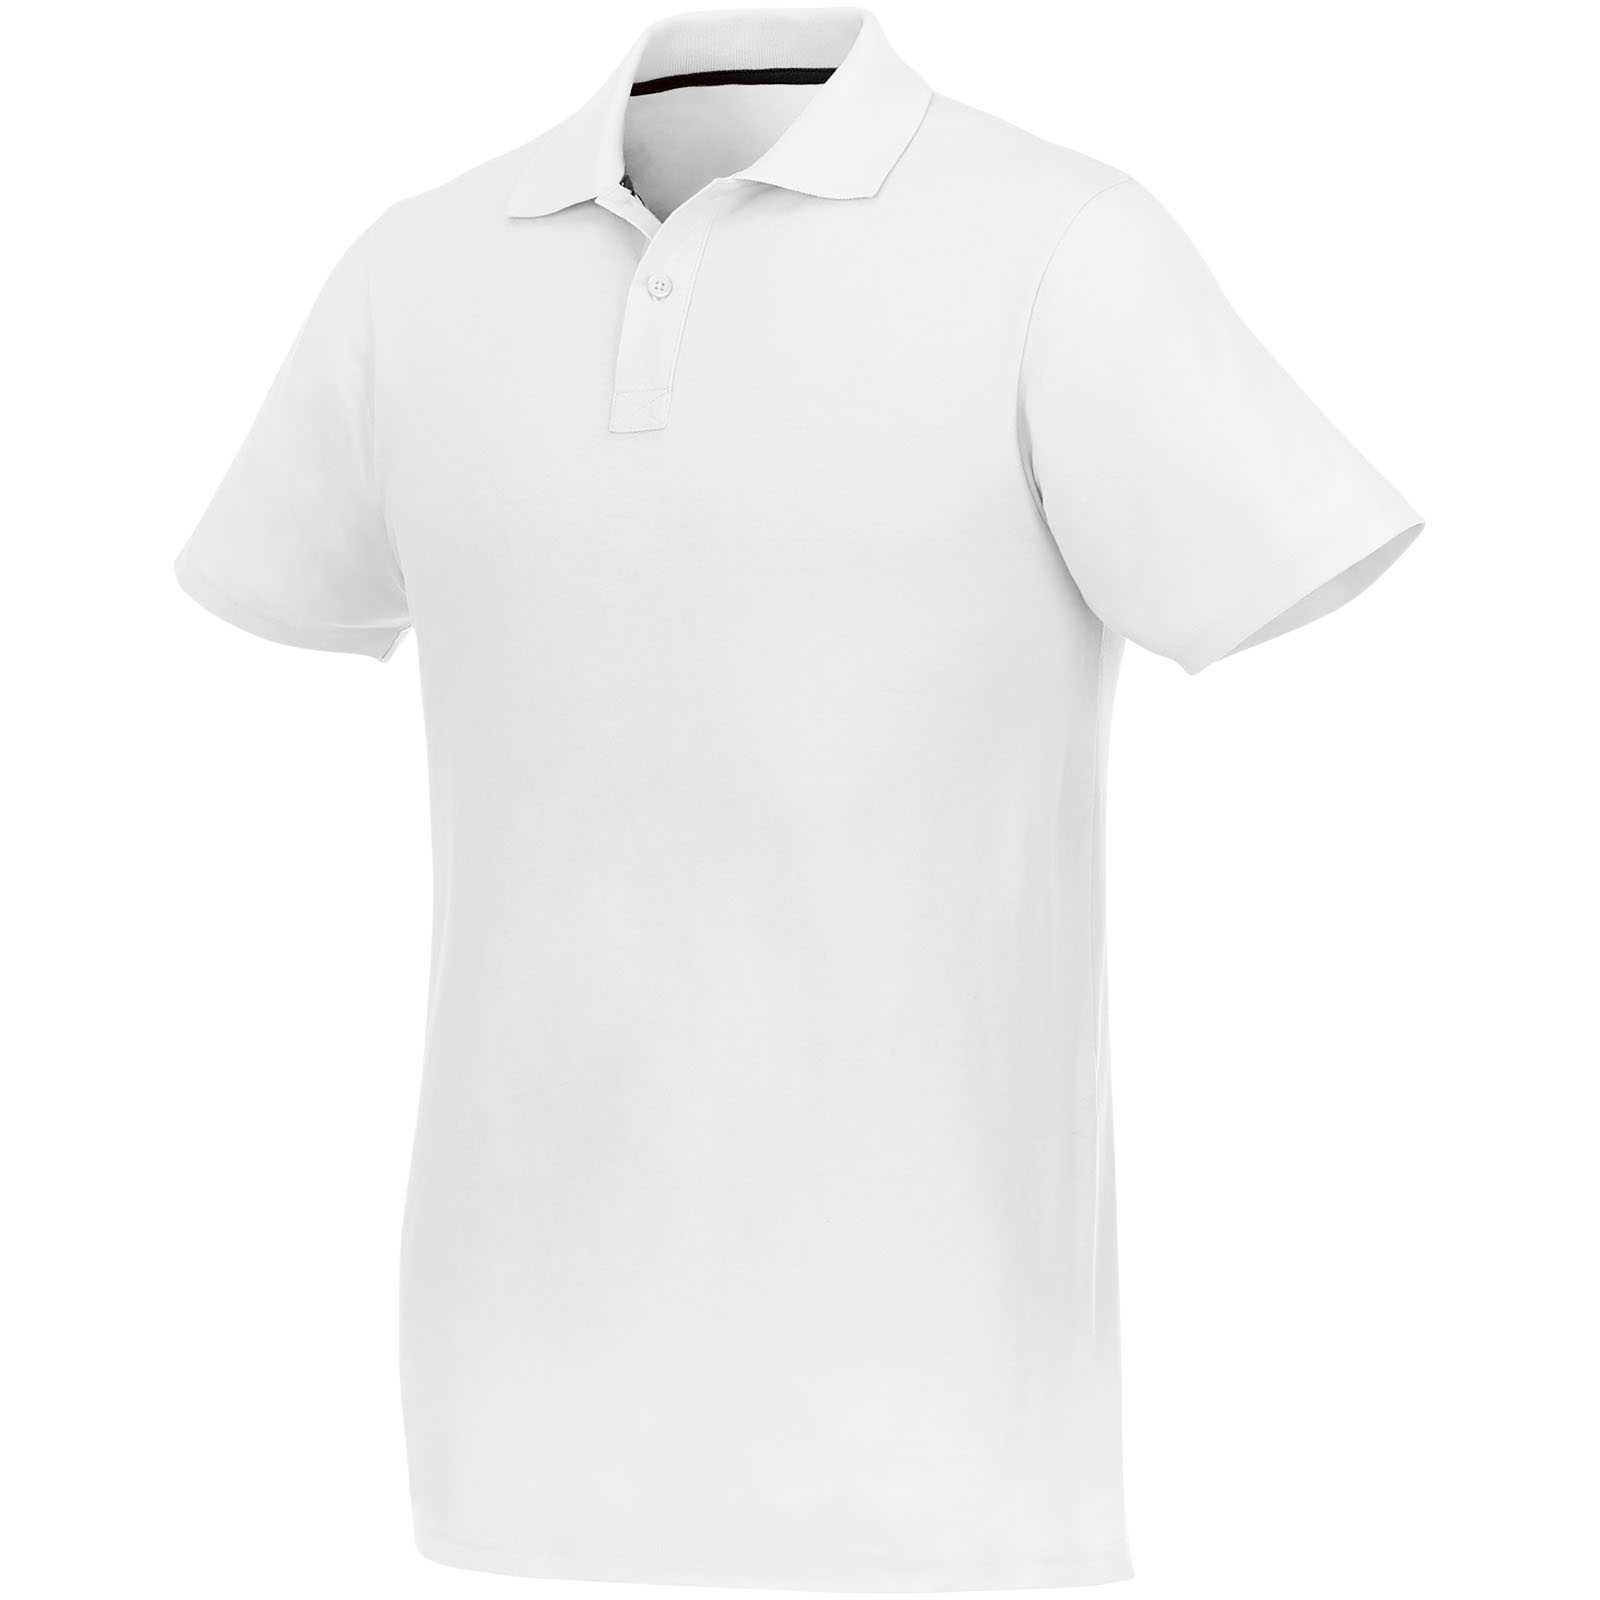 Clothing - Helios short sleeve men's polo